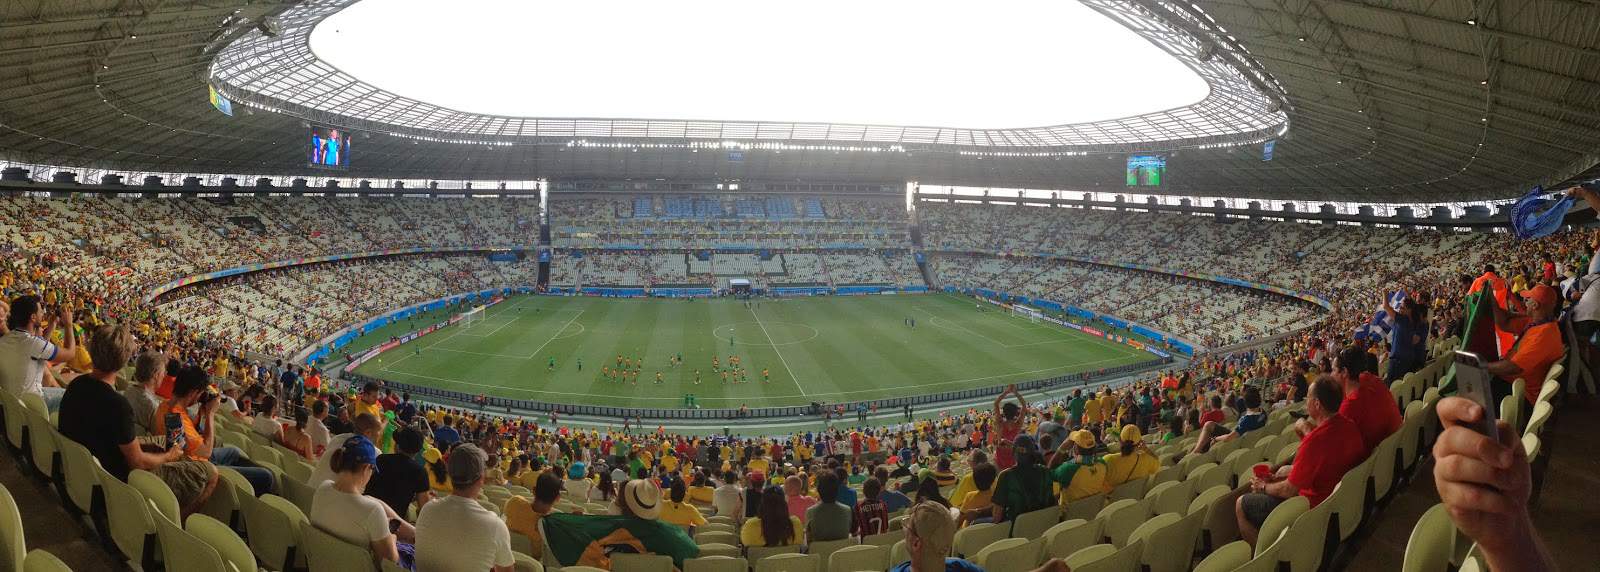 Arena Castelão in Fortaleza, Brazil World Cup 2014